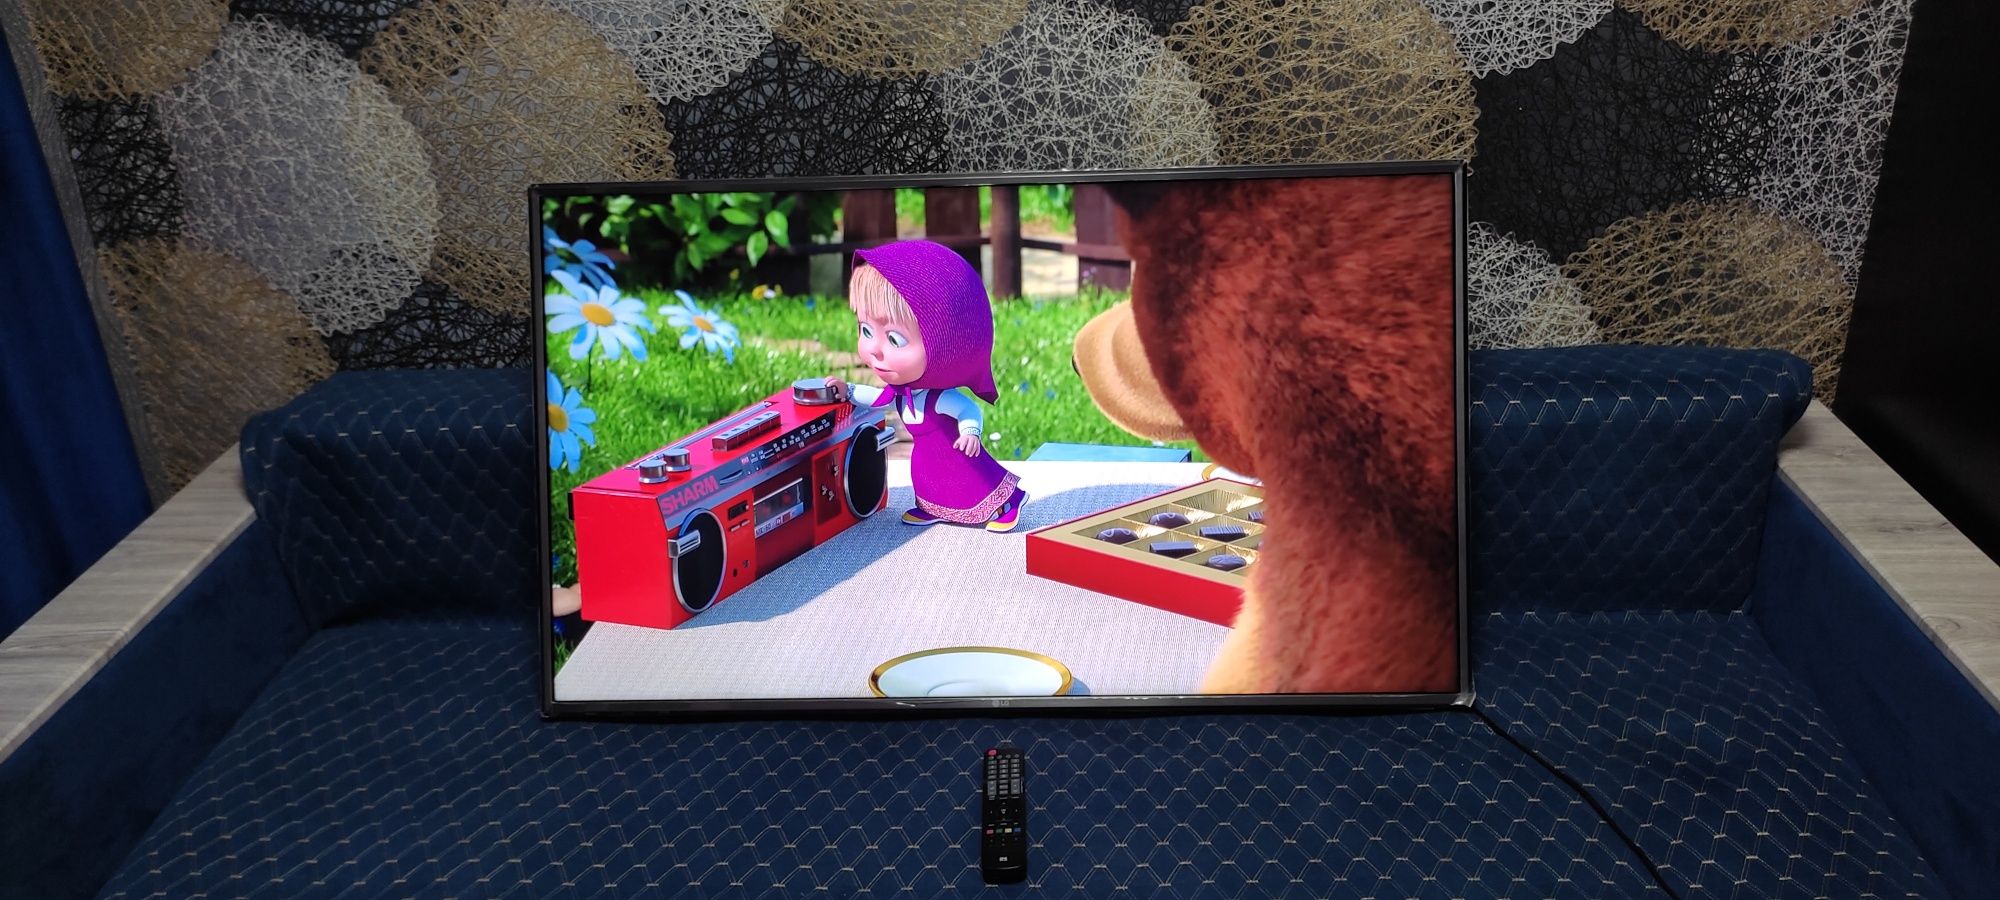 Телевизор LG smart 49дюймов (124см)